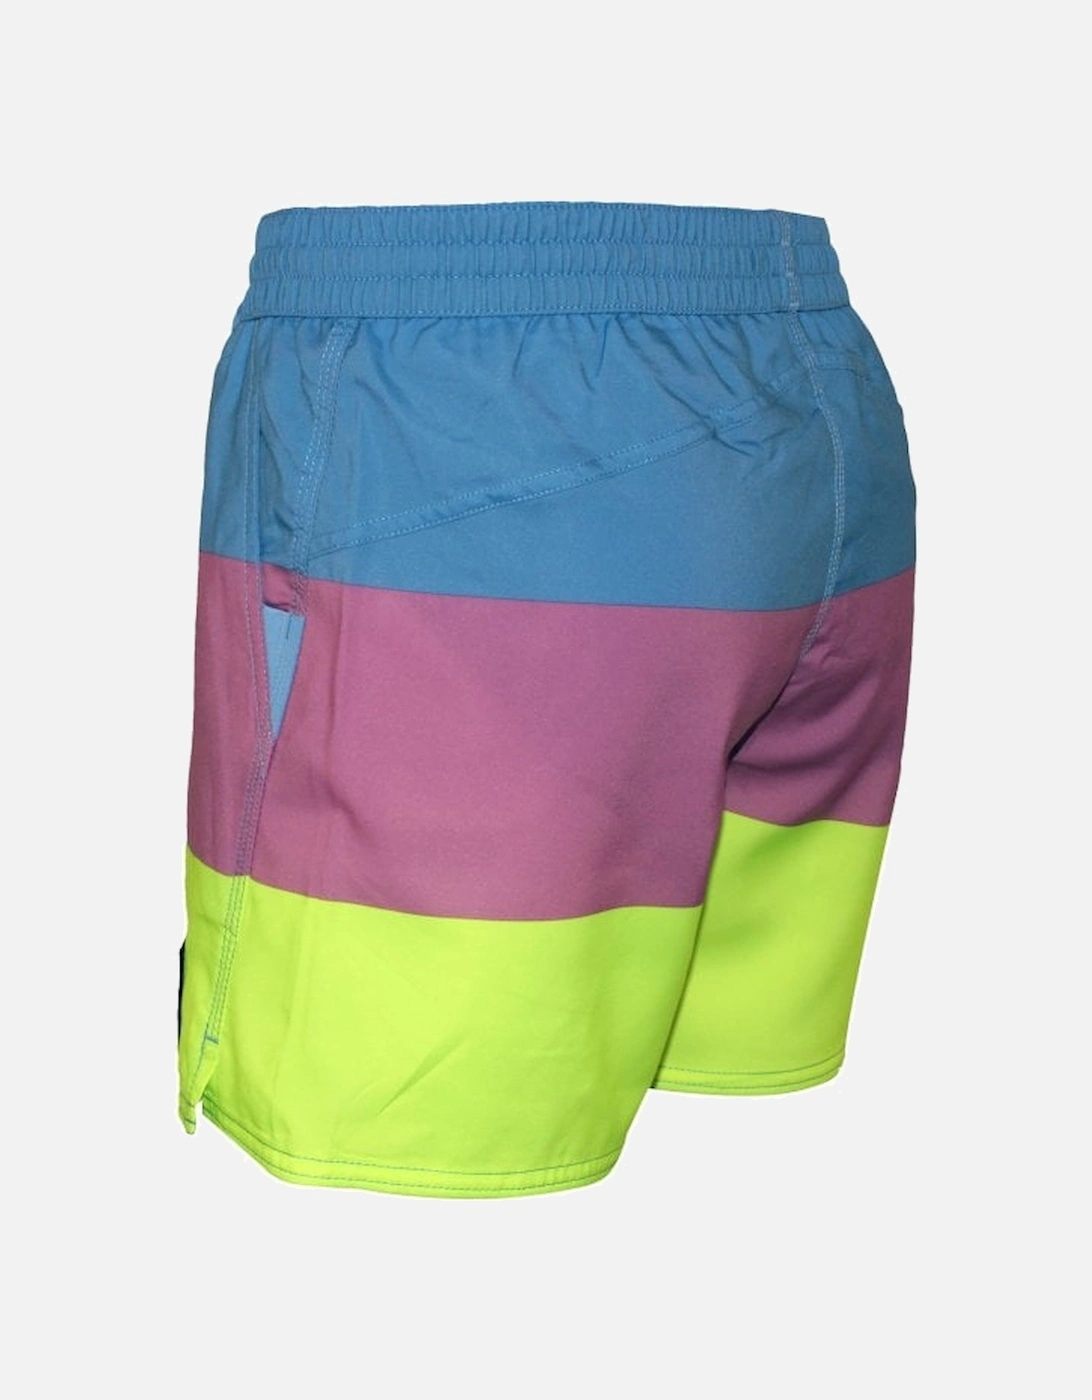 Vert Horizon Block Stripes Swim Shorts, Blue/pink